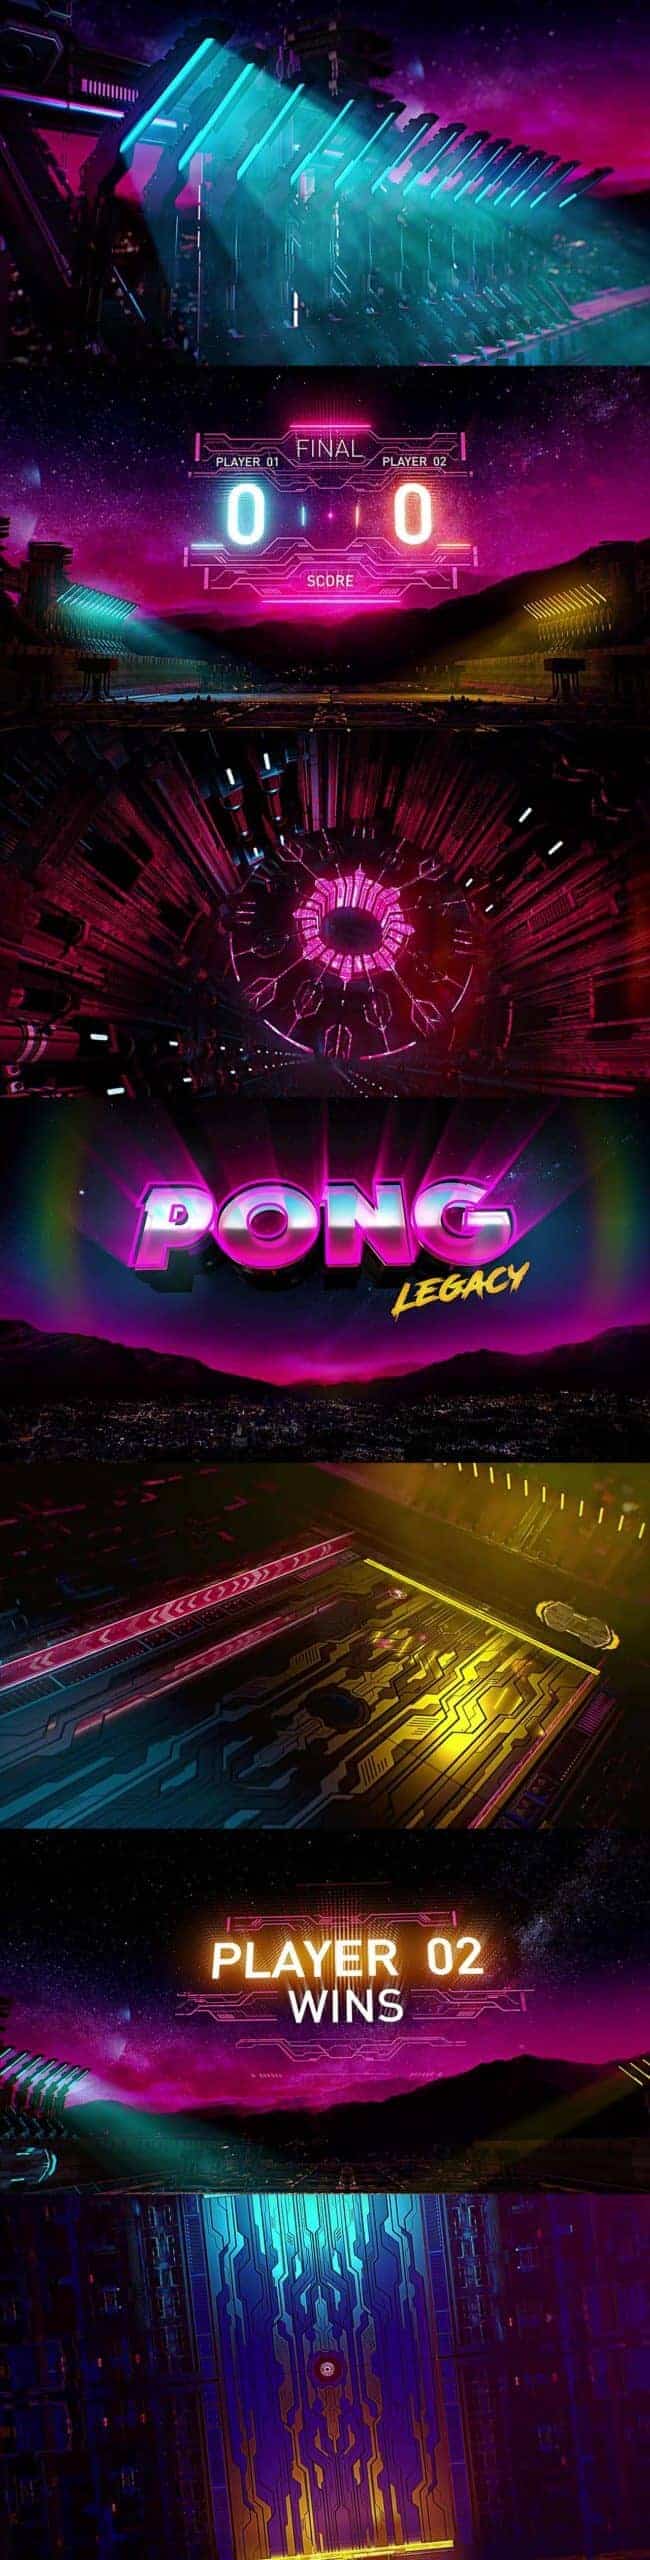 PONG Legacy on Vimeo scaled